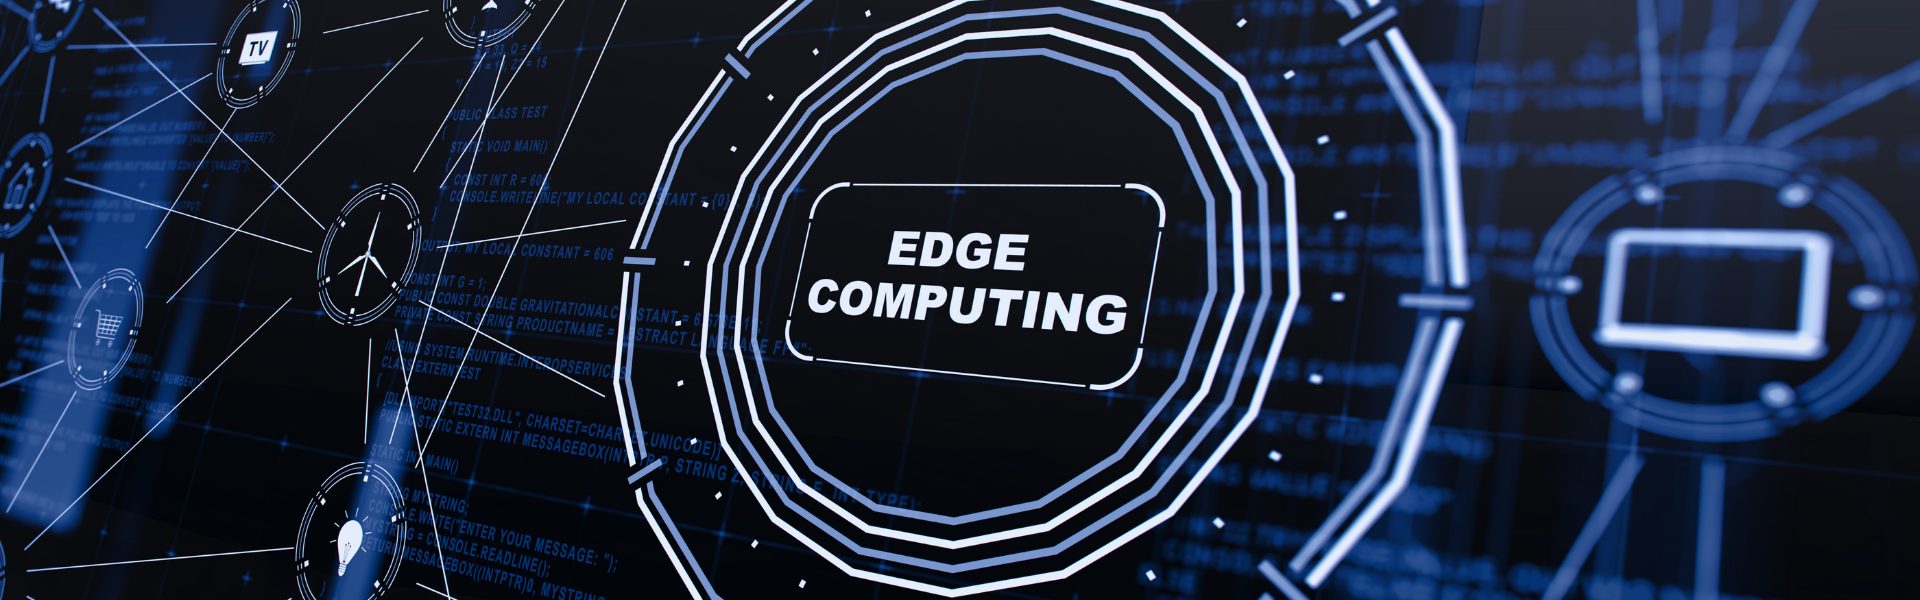 edge computing comparisons cloud